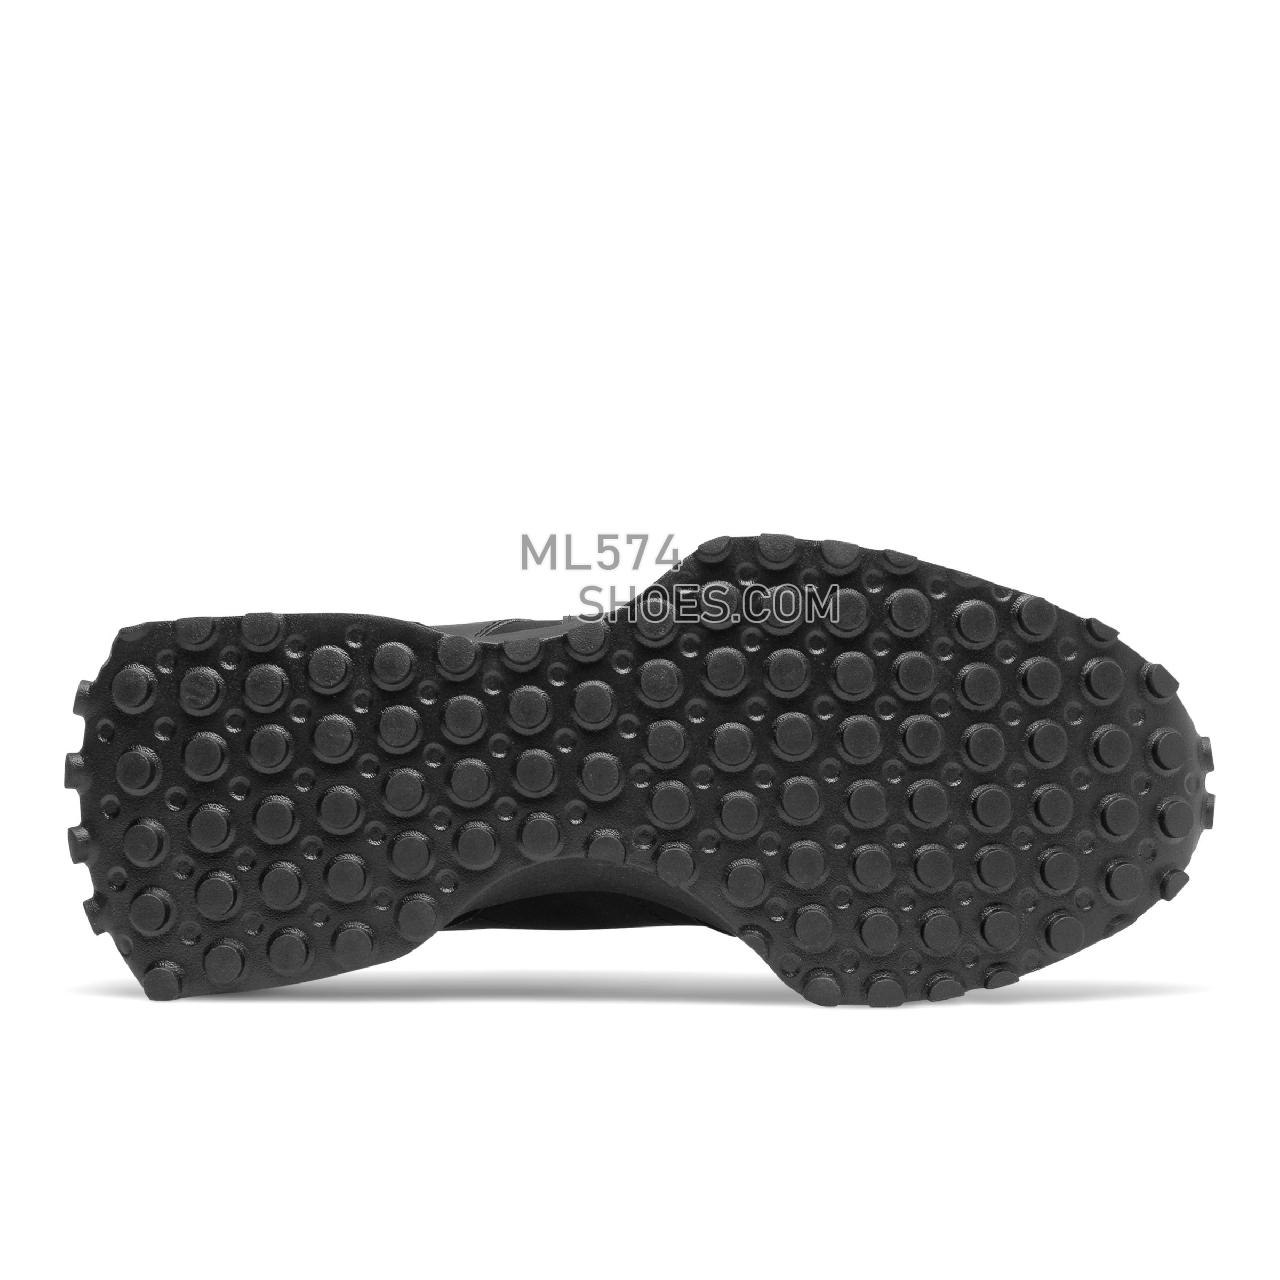 New Balance 327 - Unisex Men's Women's Sport Style Sneakers - Black - MS327LX1